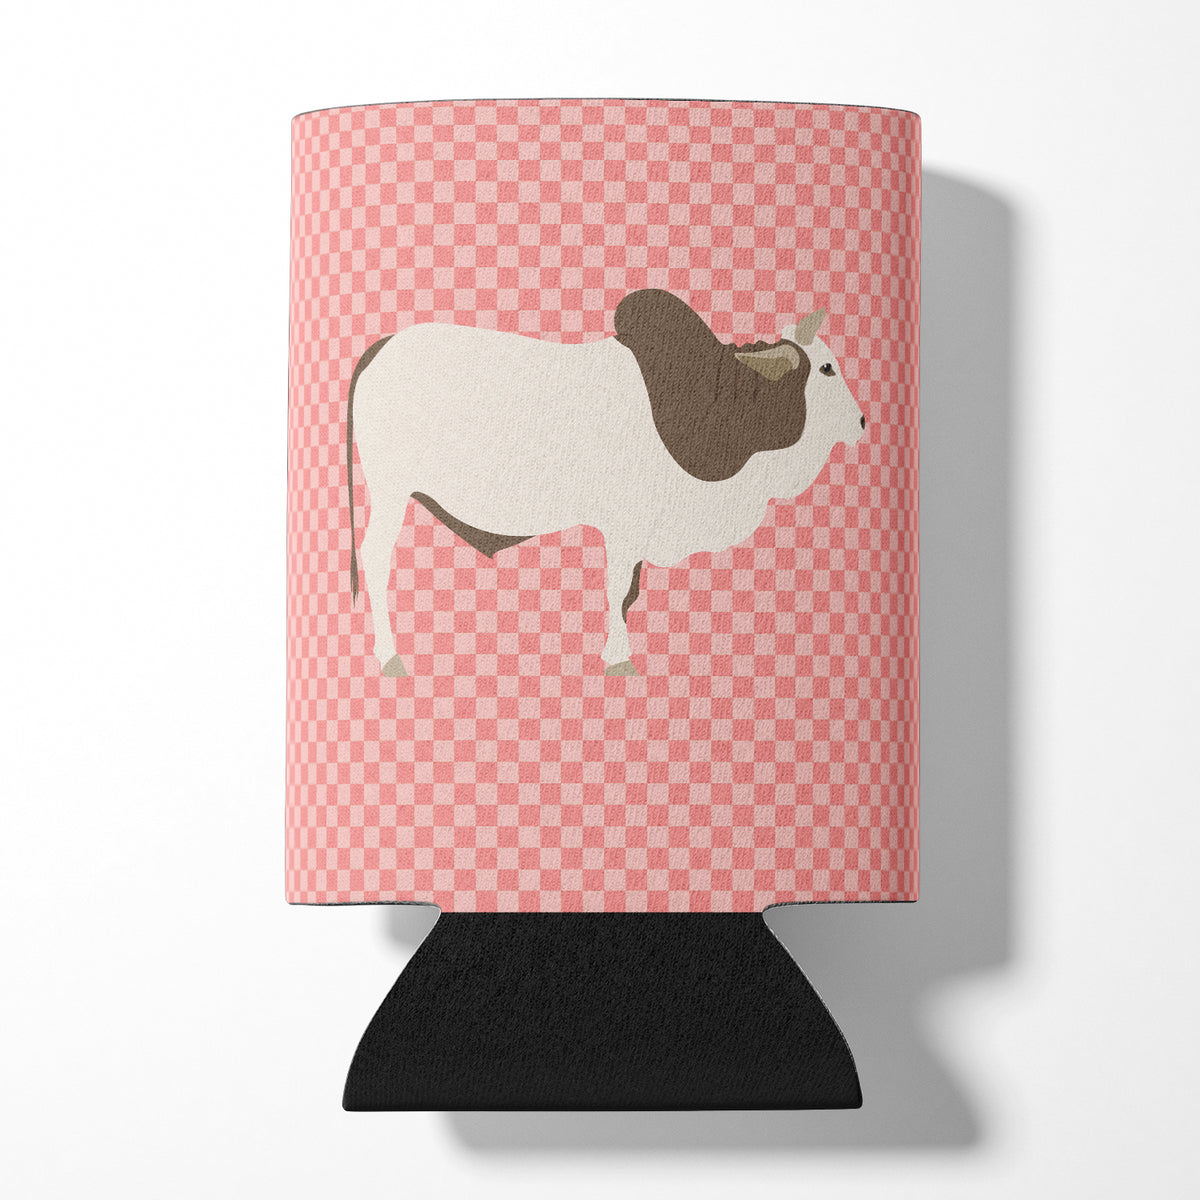 Malvi Cow Pink Check Can or Bottle Hugger BB7830CC